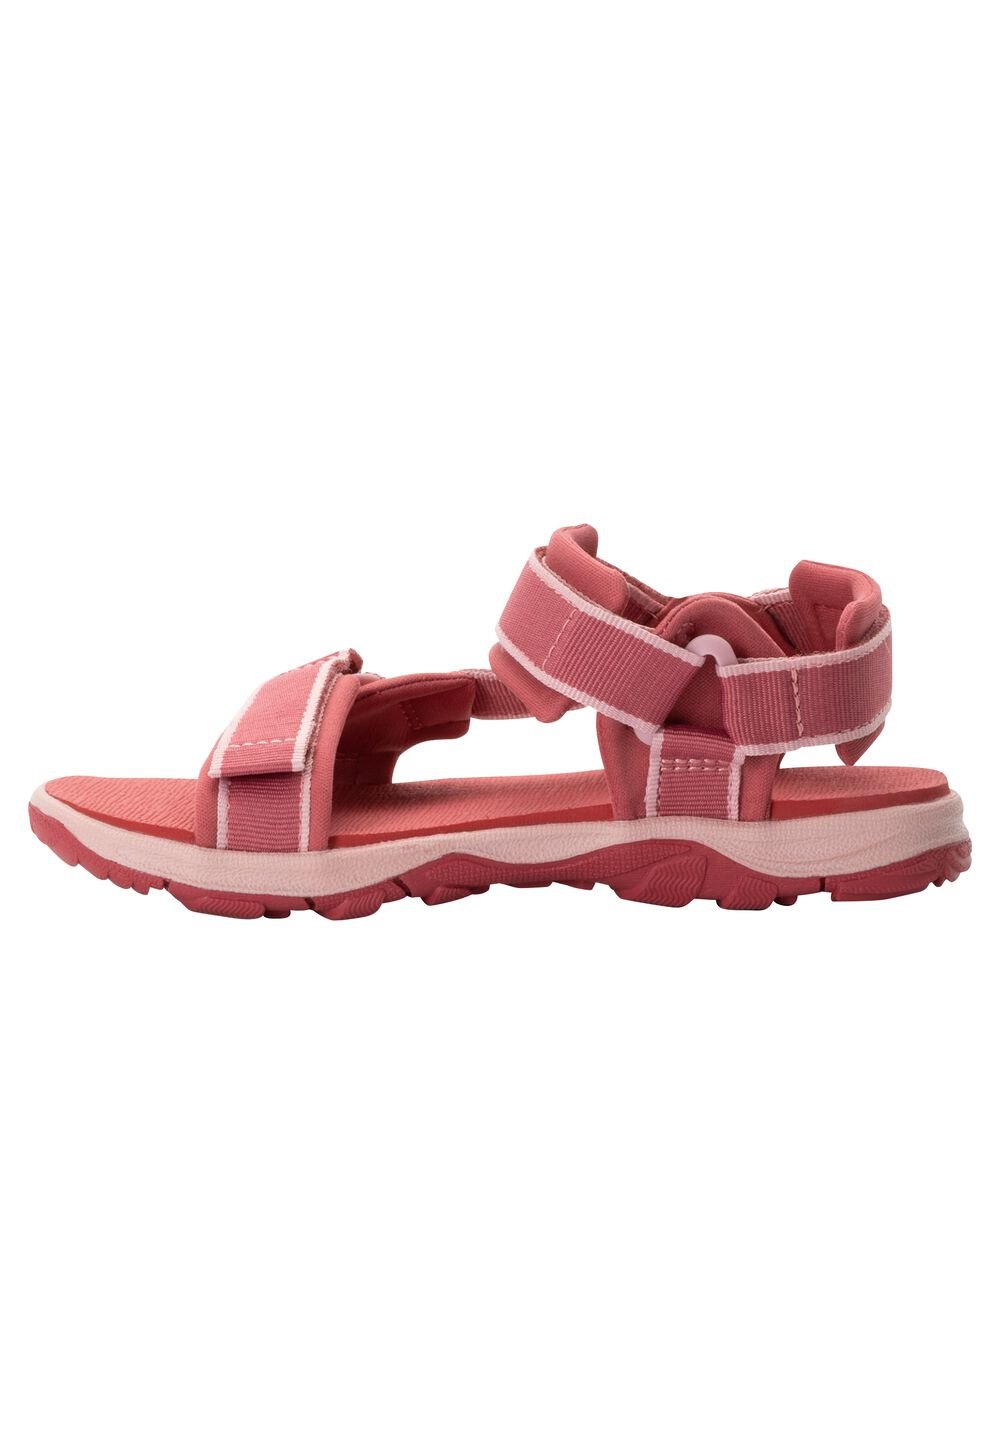 Jack Wolfskin Seven Seas 3 Kids Kinderen sandalen 37 soft pink soft pink